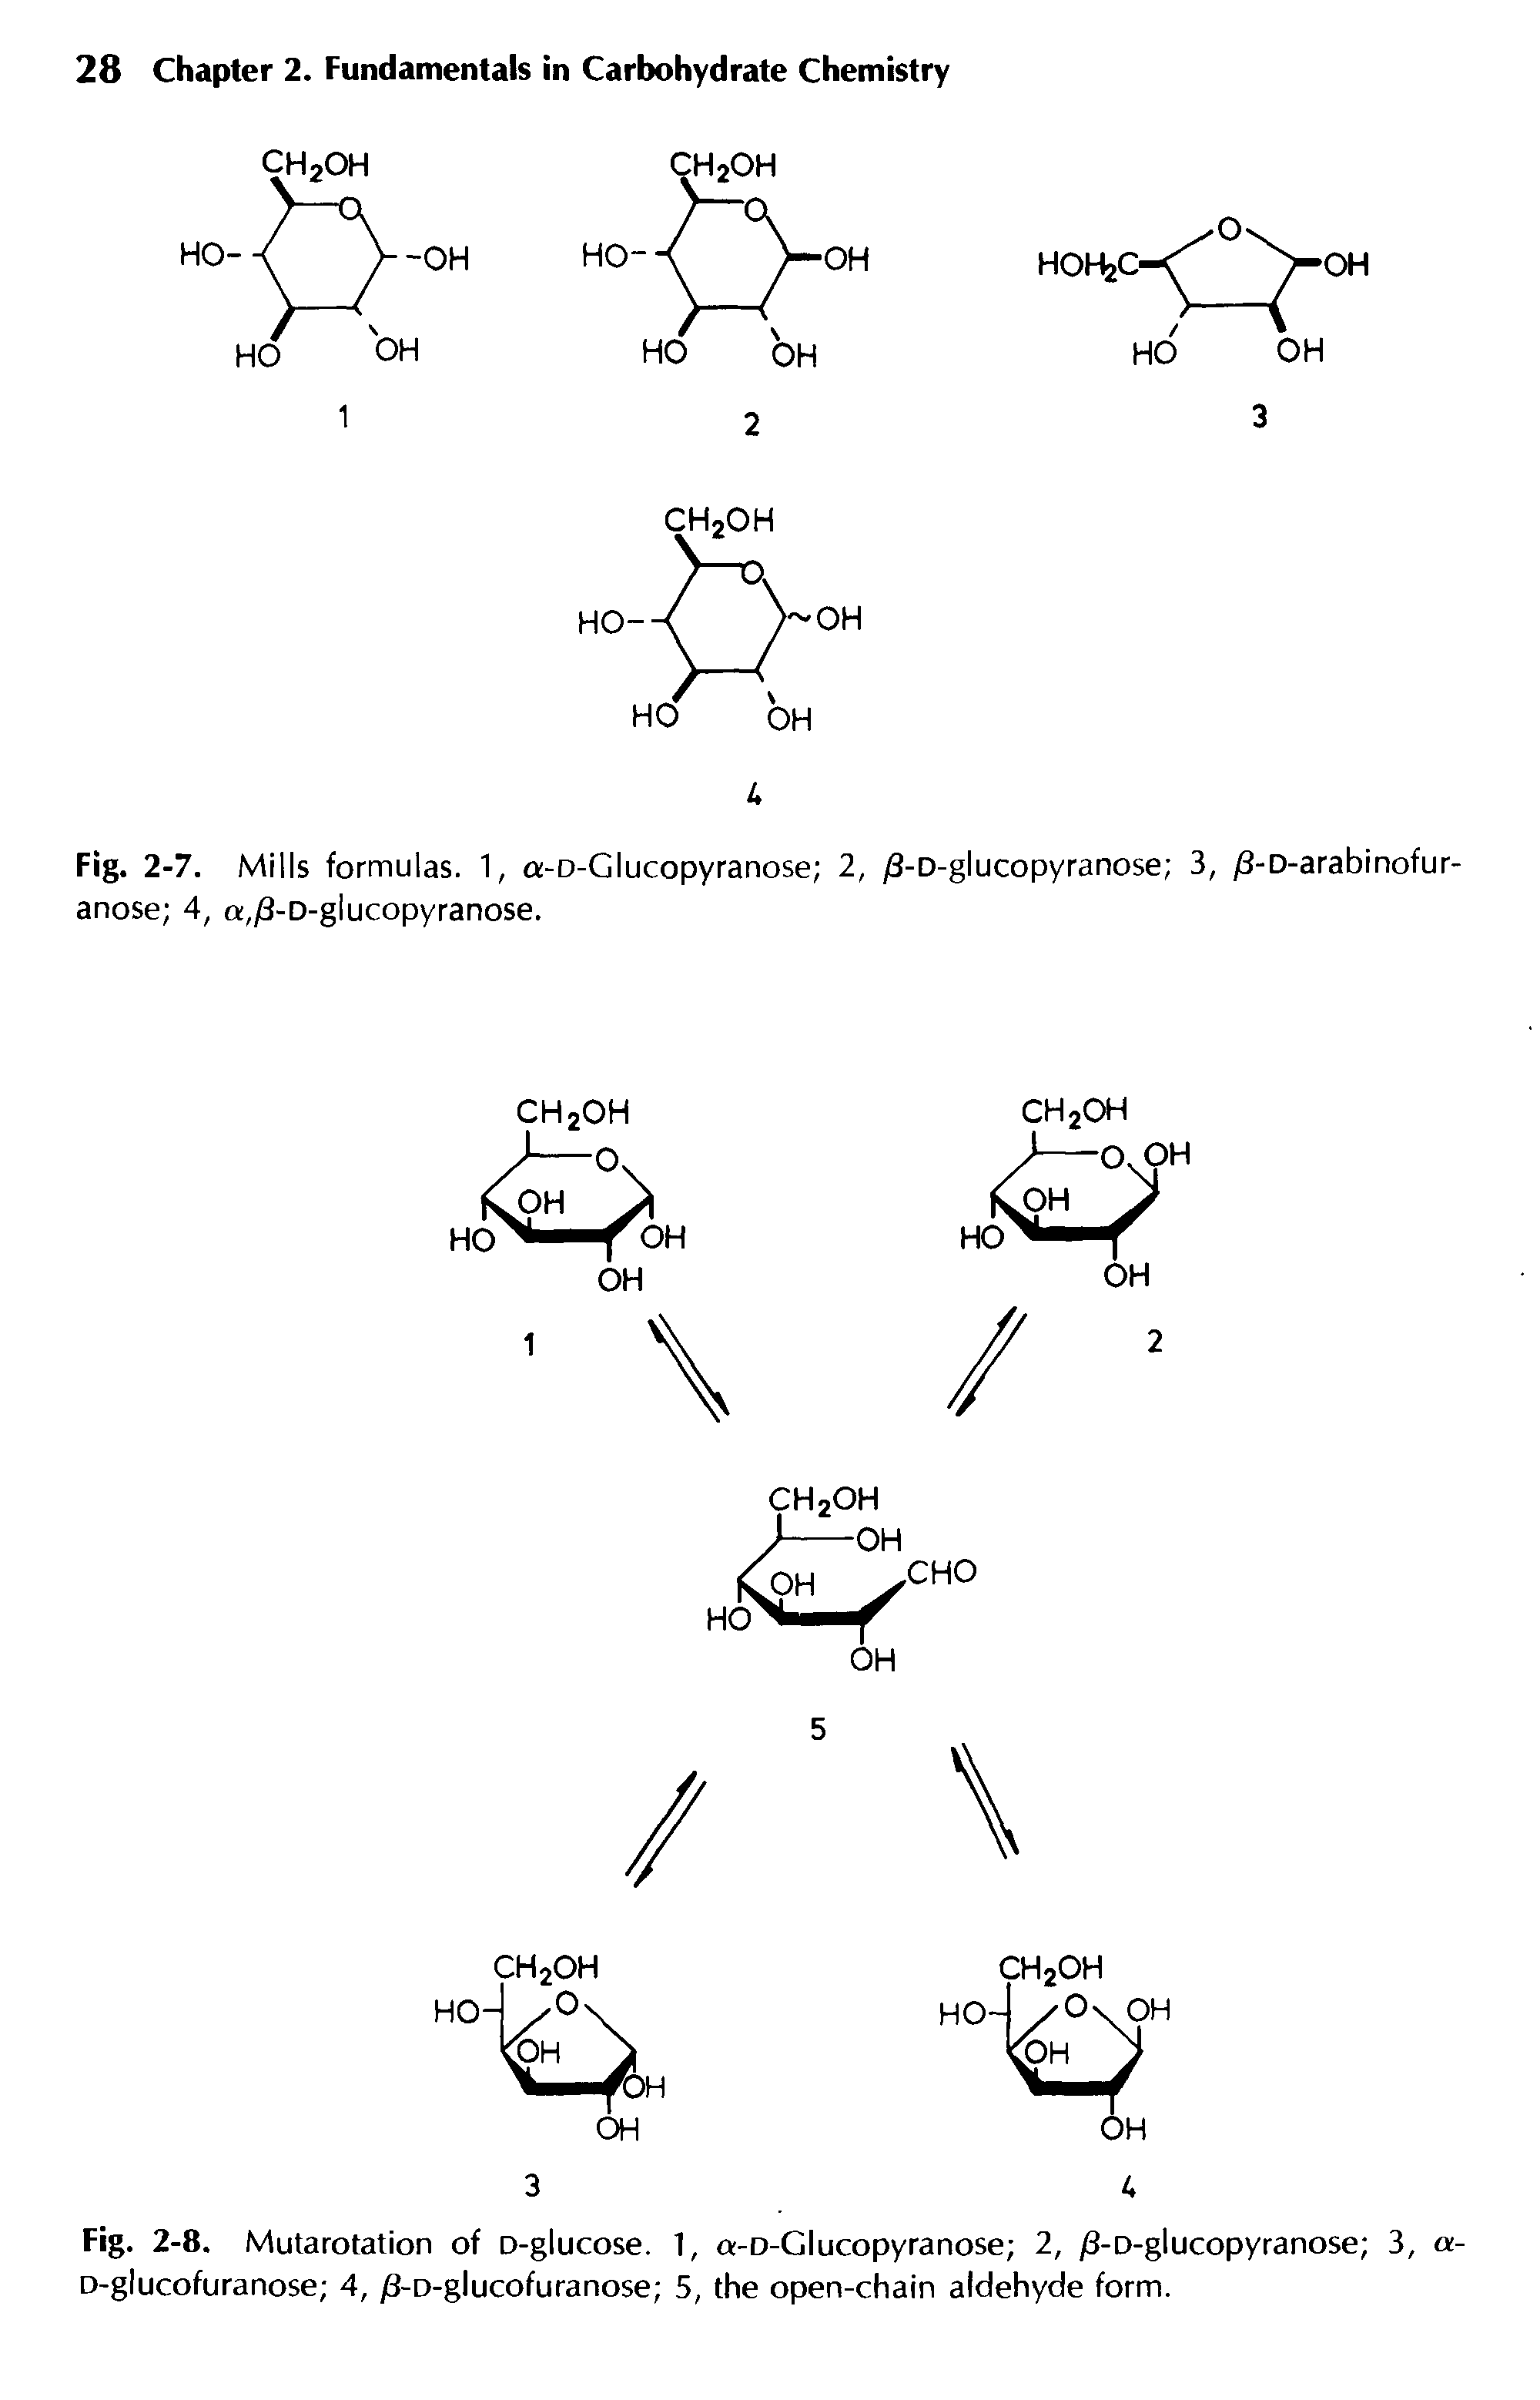 Fig. 2-8. Mutarotation of D-glucose. 1, a-D-Glucopyranose 2, /3-D-glucopyranose 3, a-D-glucofuranose 4, /3-D-glucofuranose 5, the open-chain aldehyde form.